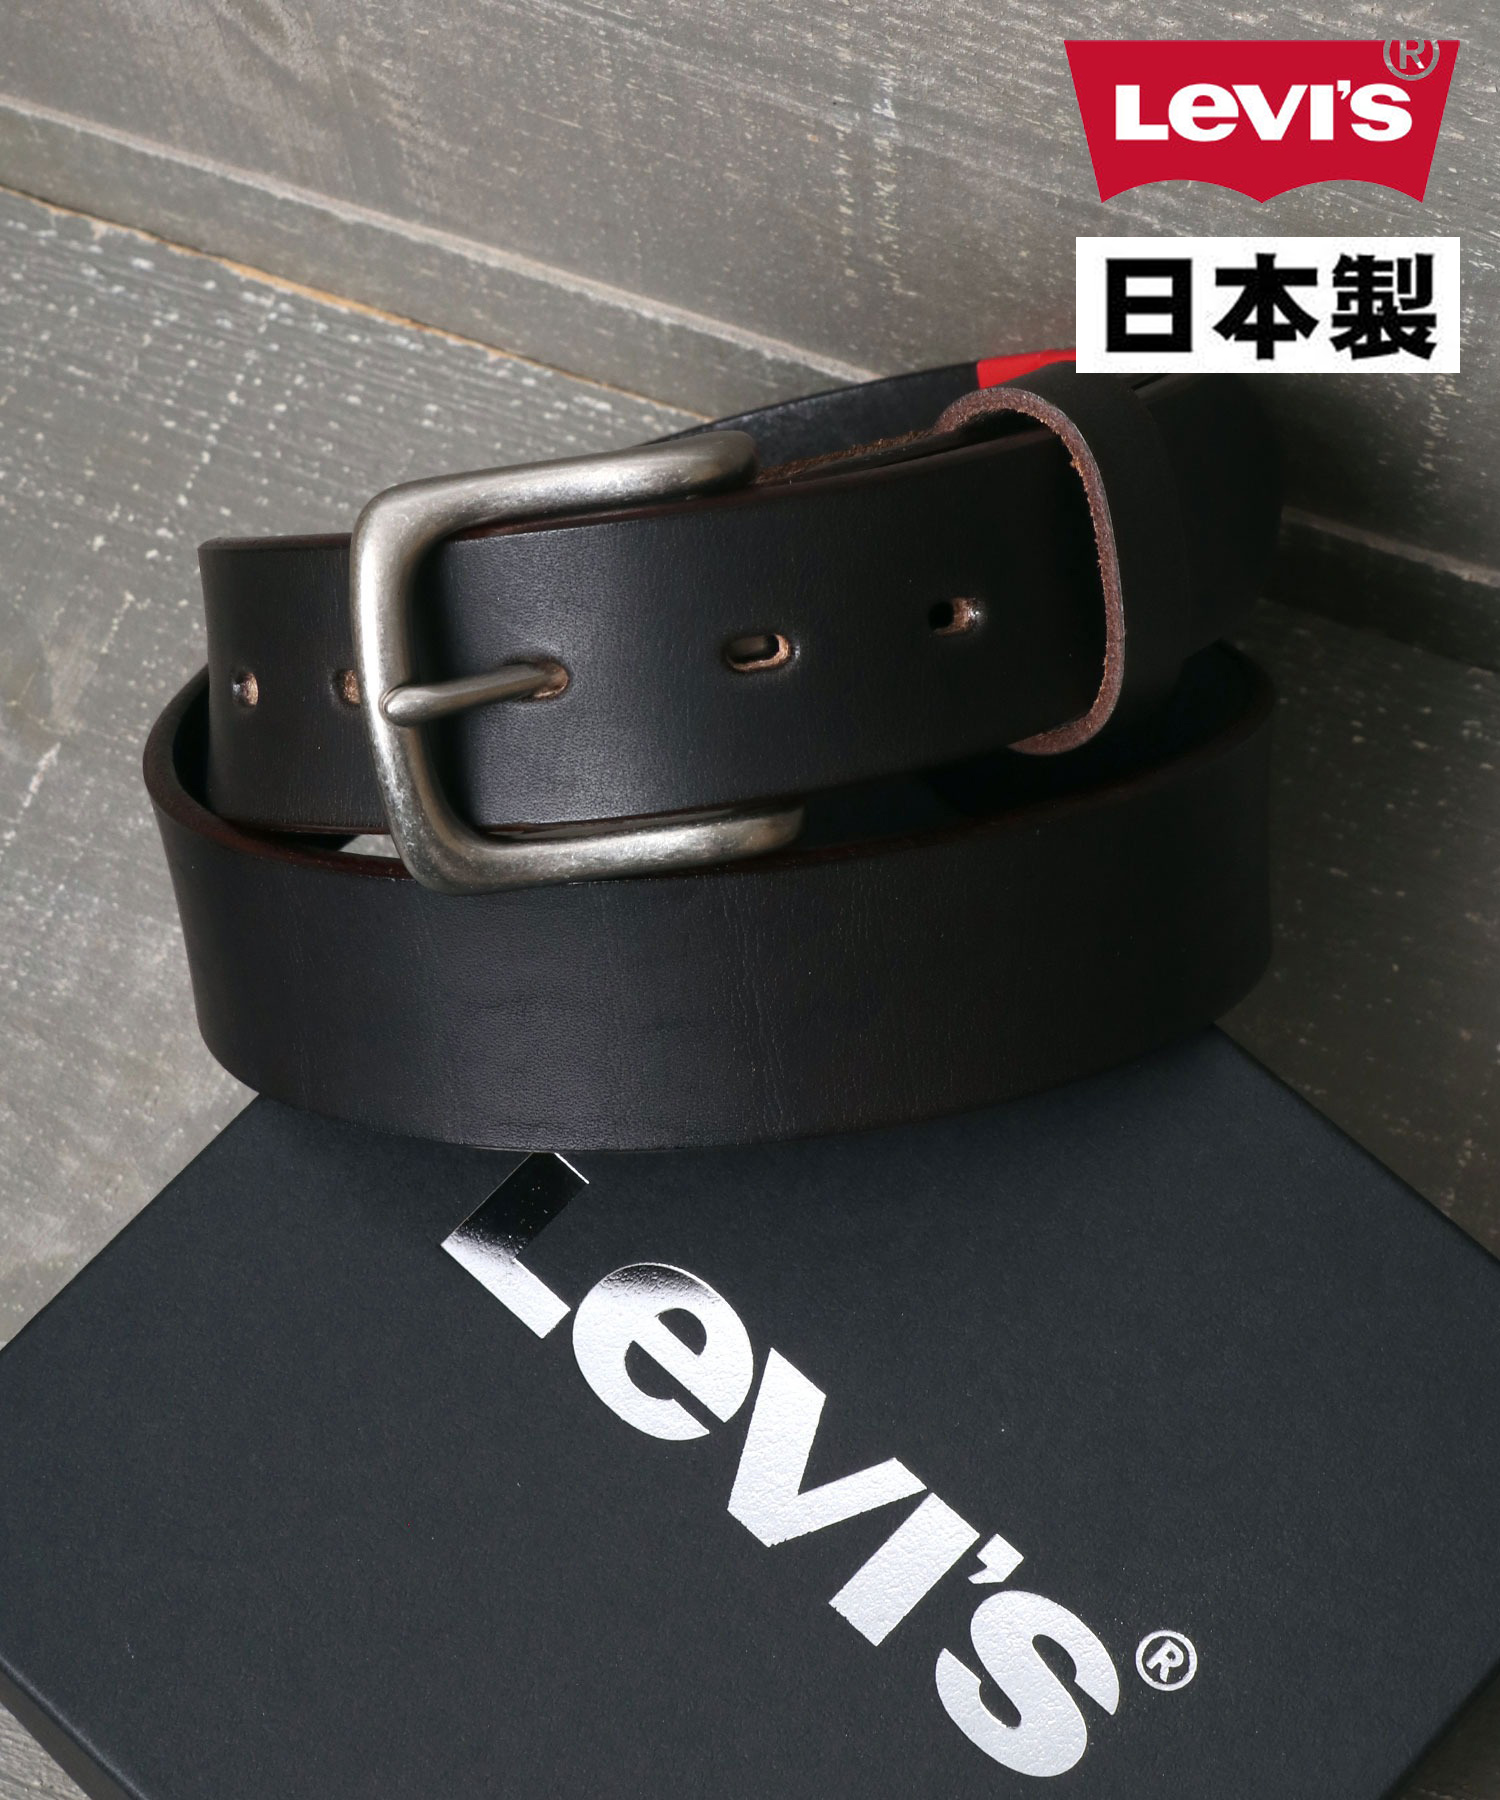 Levi's/リーバイス】made in JAPAN 国産プレミアム35mm姫路レザー 